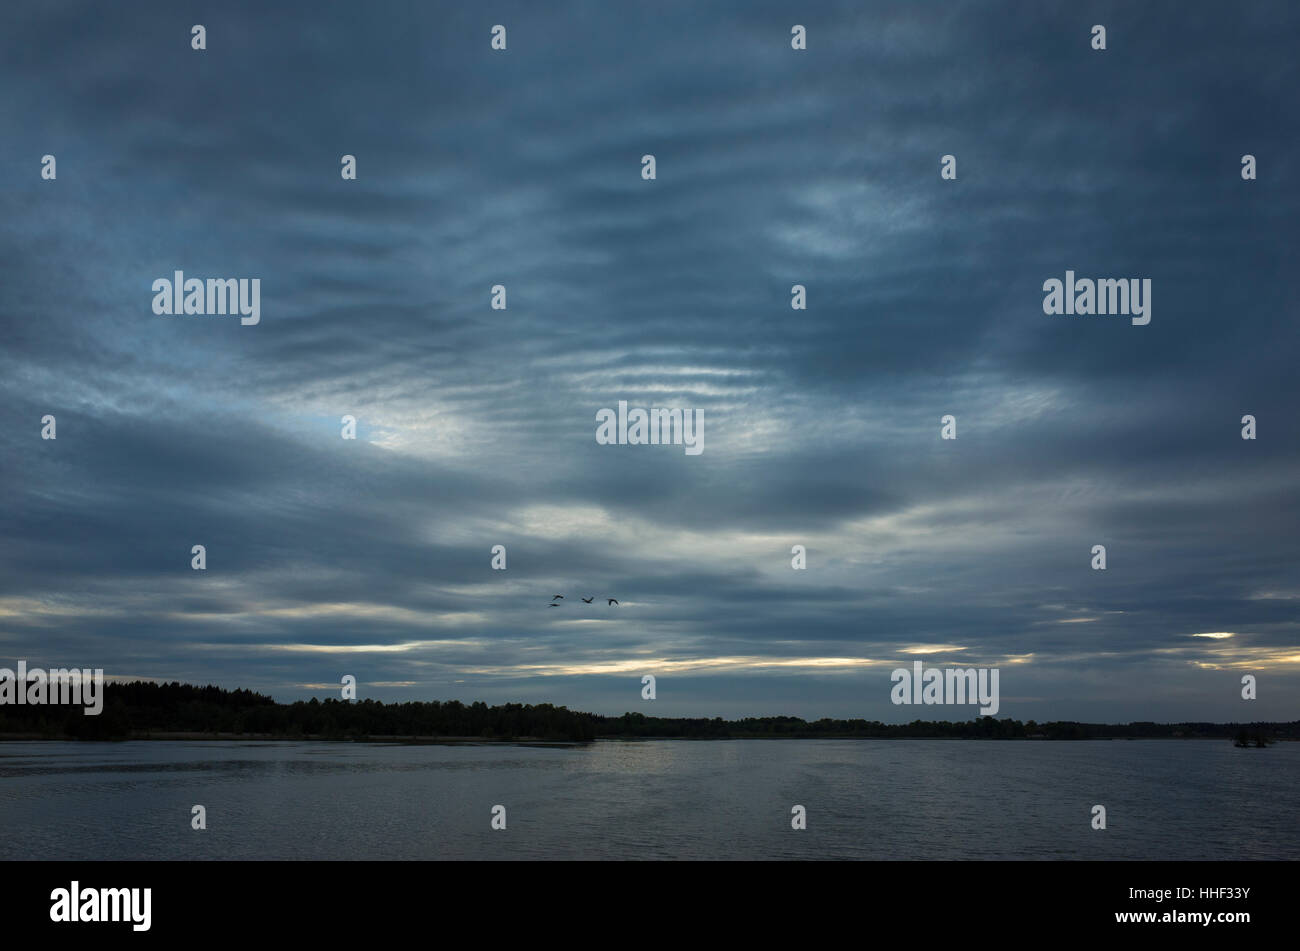 Strange Clouds Pattern In Sky Stock Photo